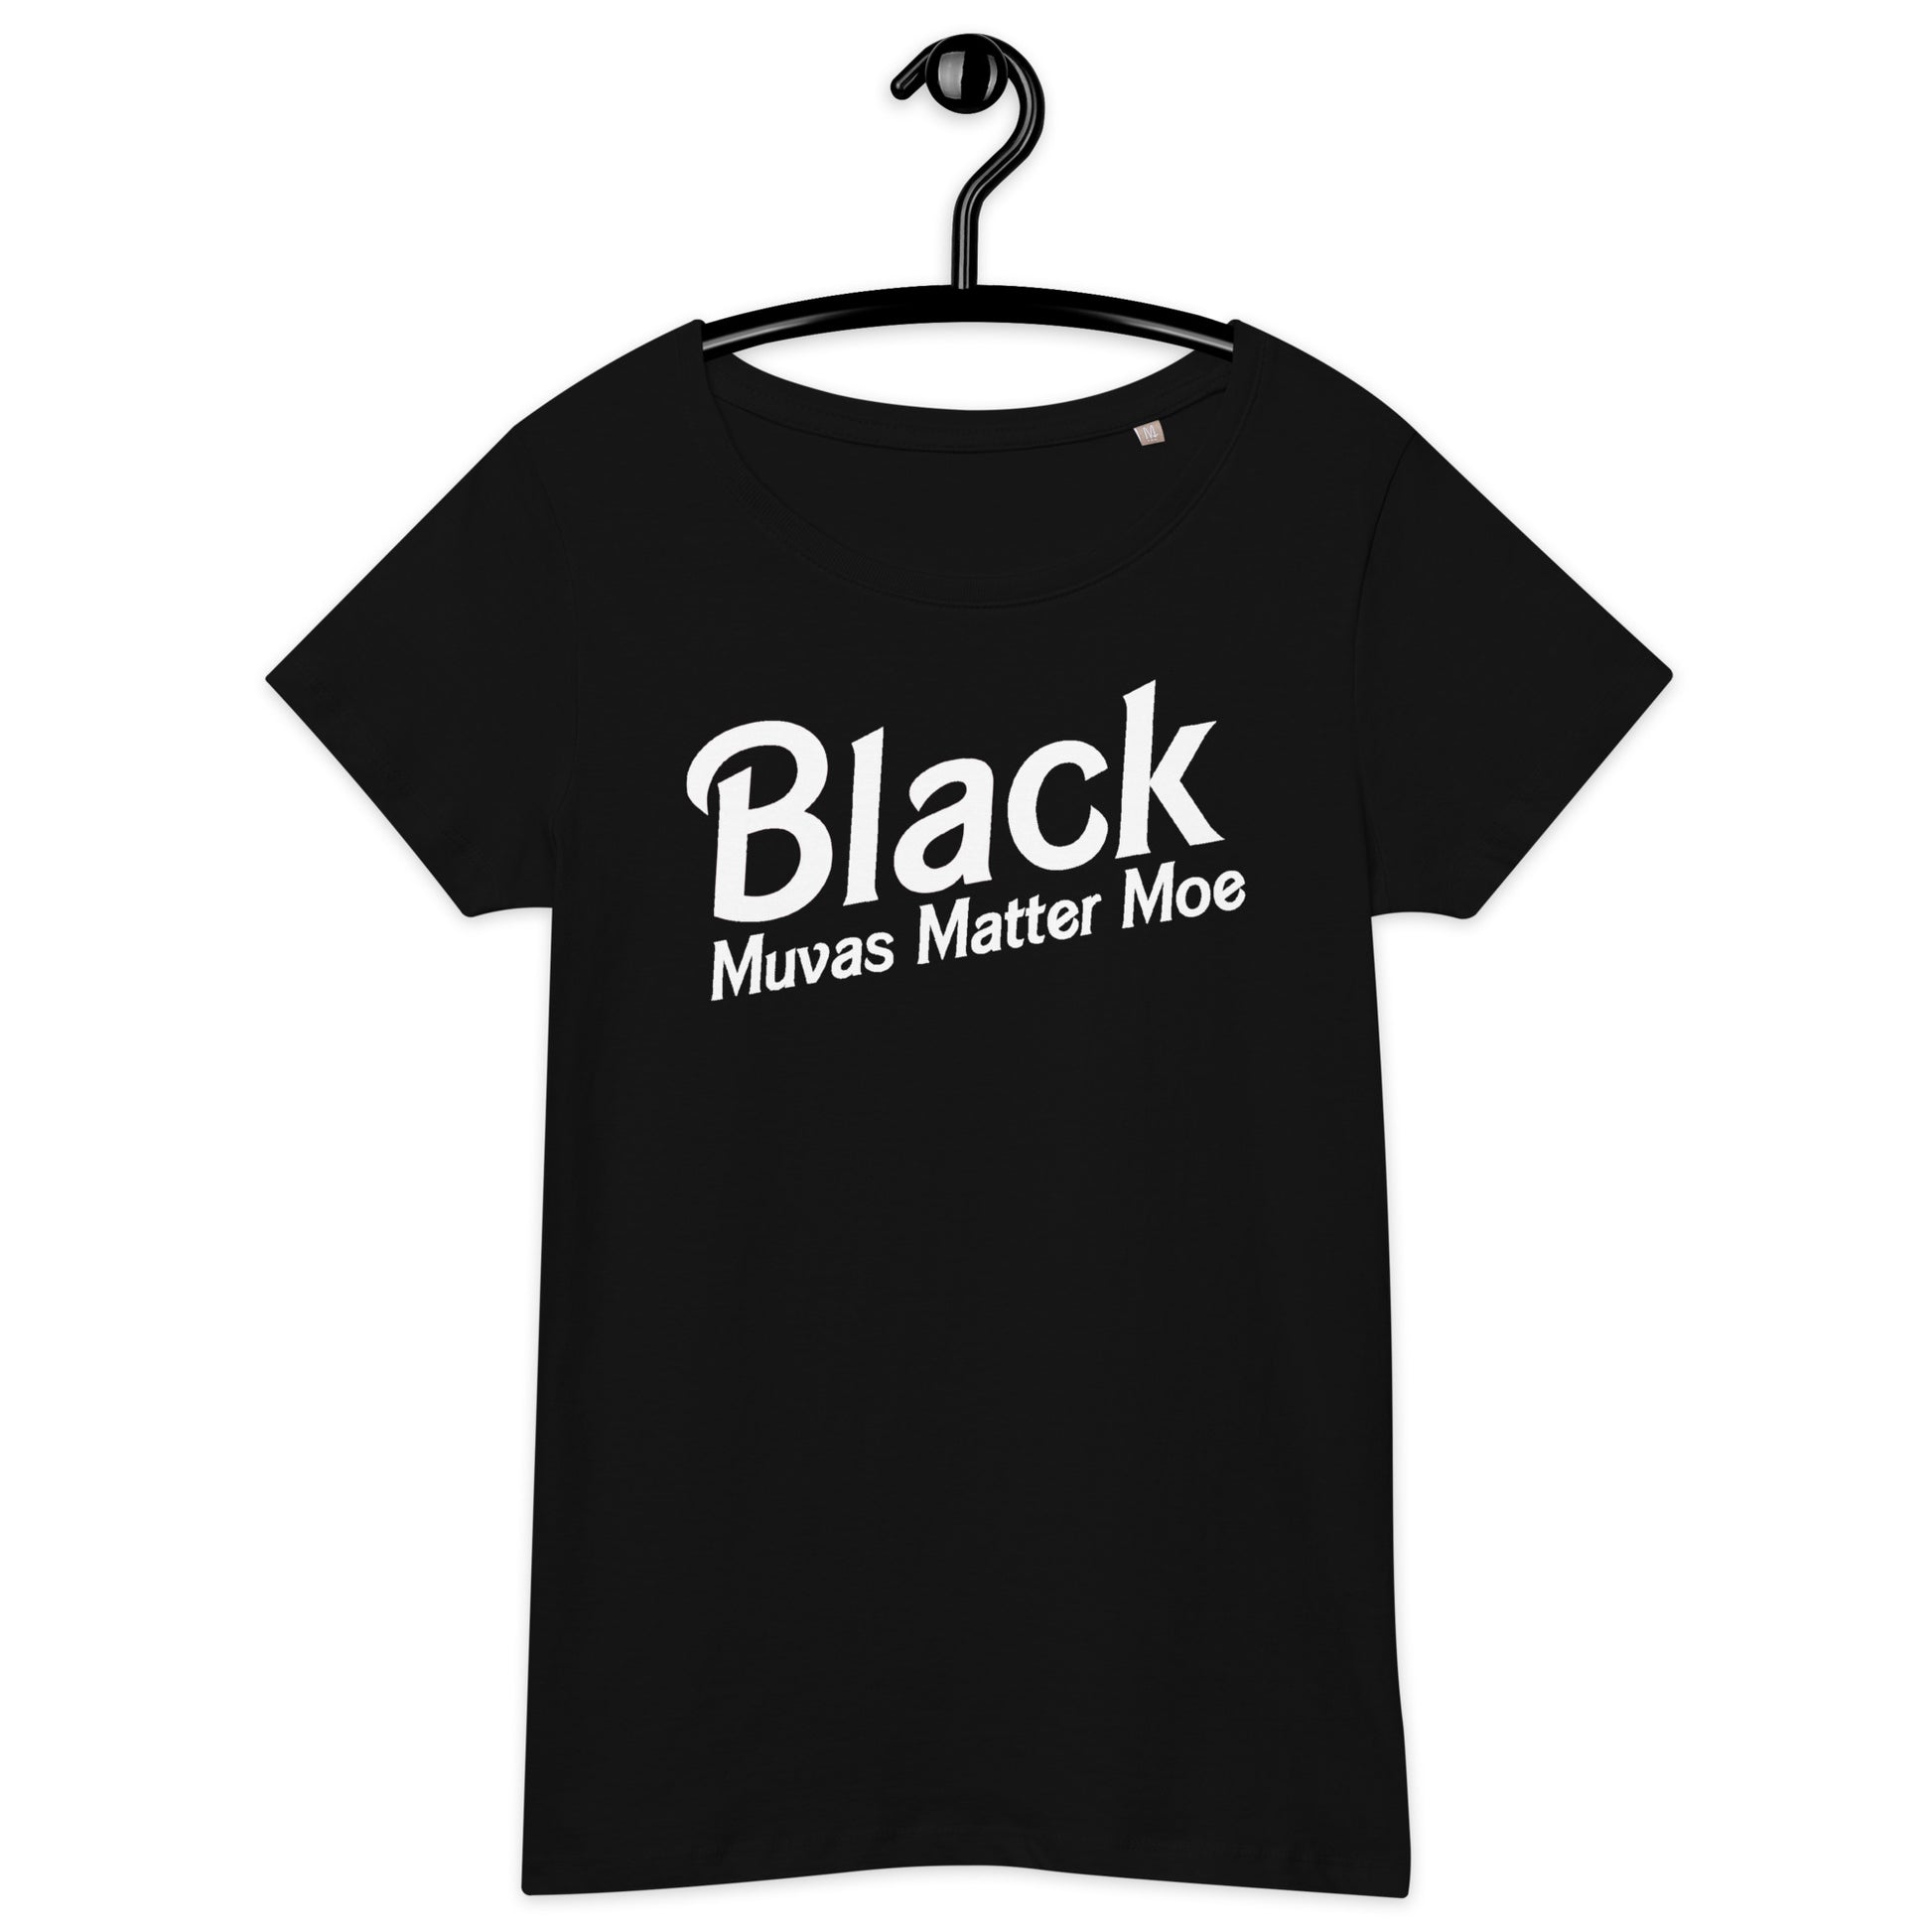 Black Muvas Matter Moe (organic t-shirt)